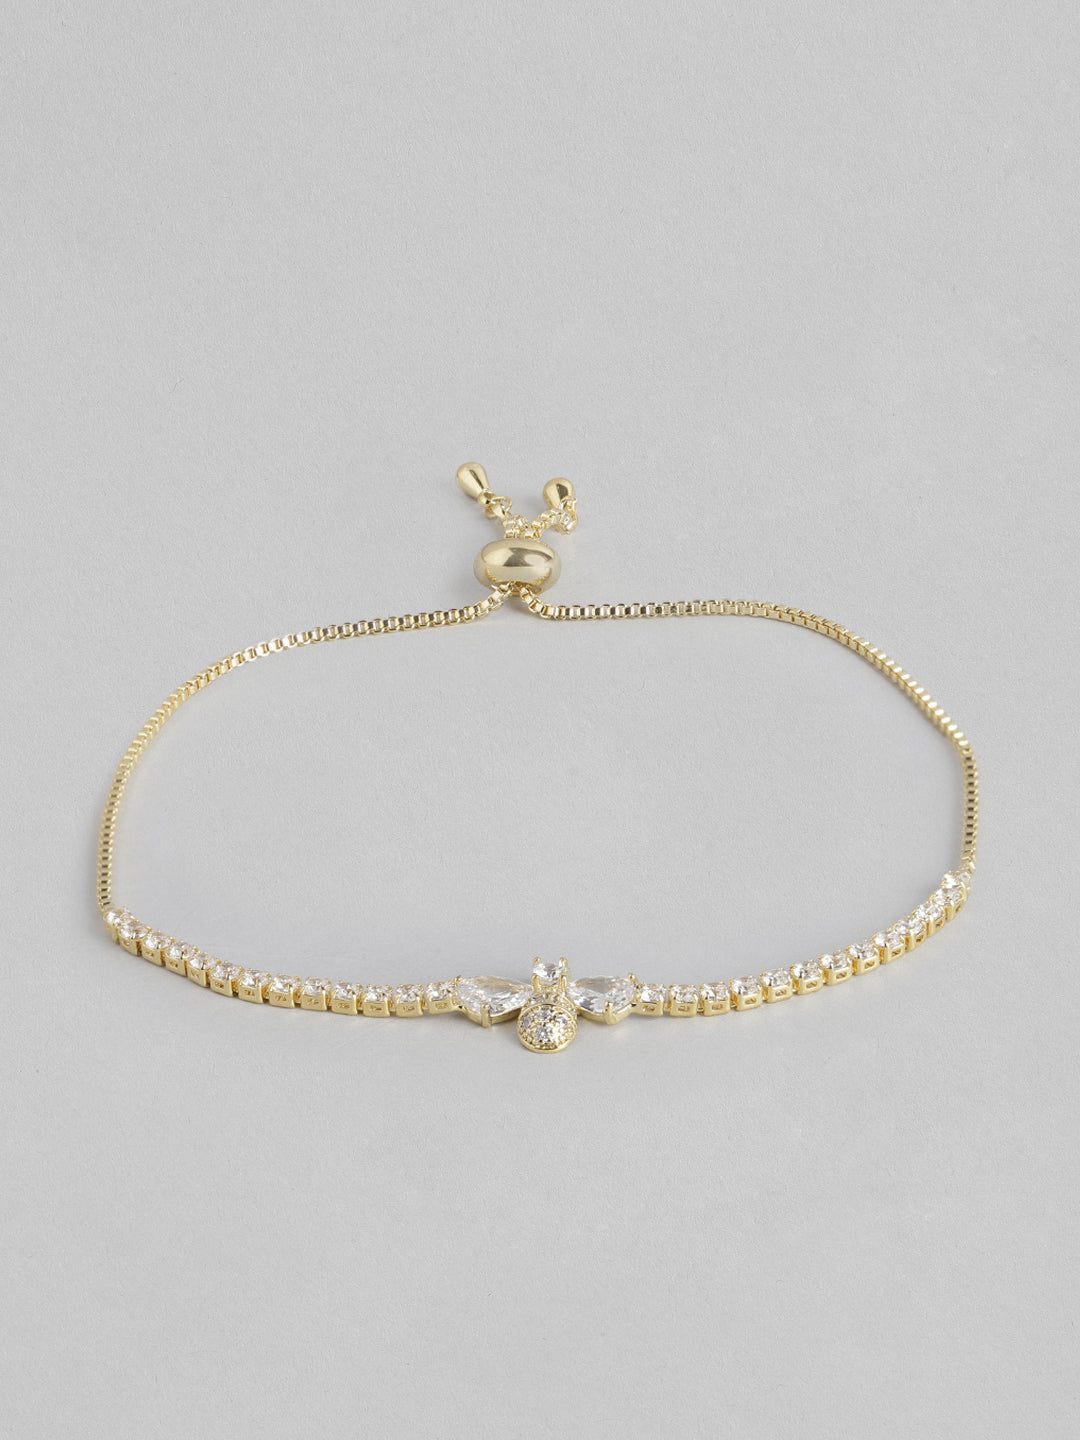 Blueberry Golden Bee stone embellished bracelet